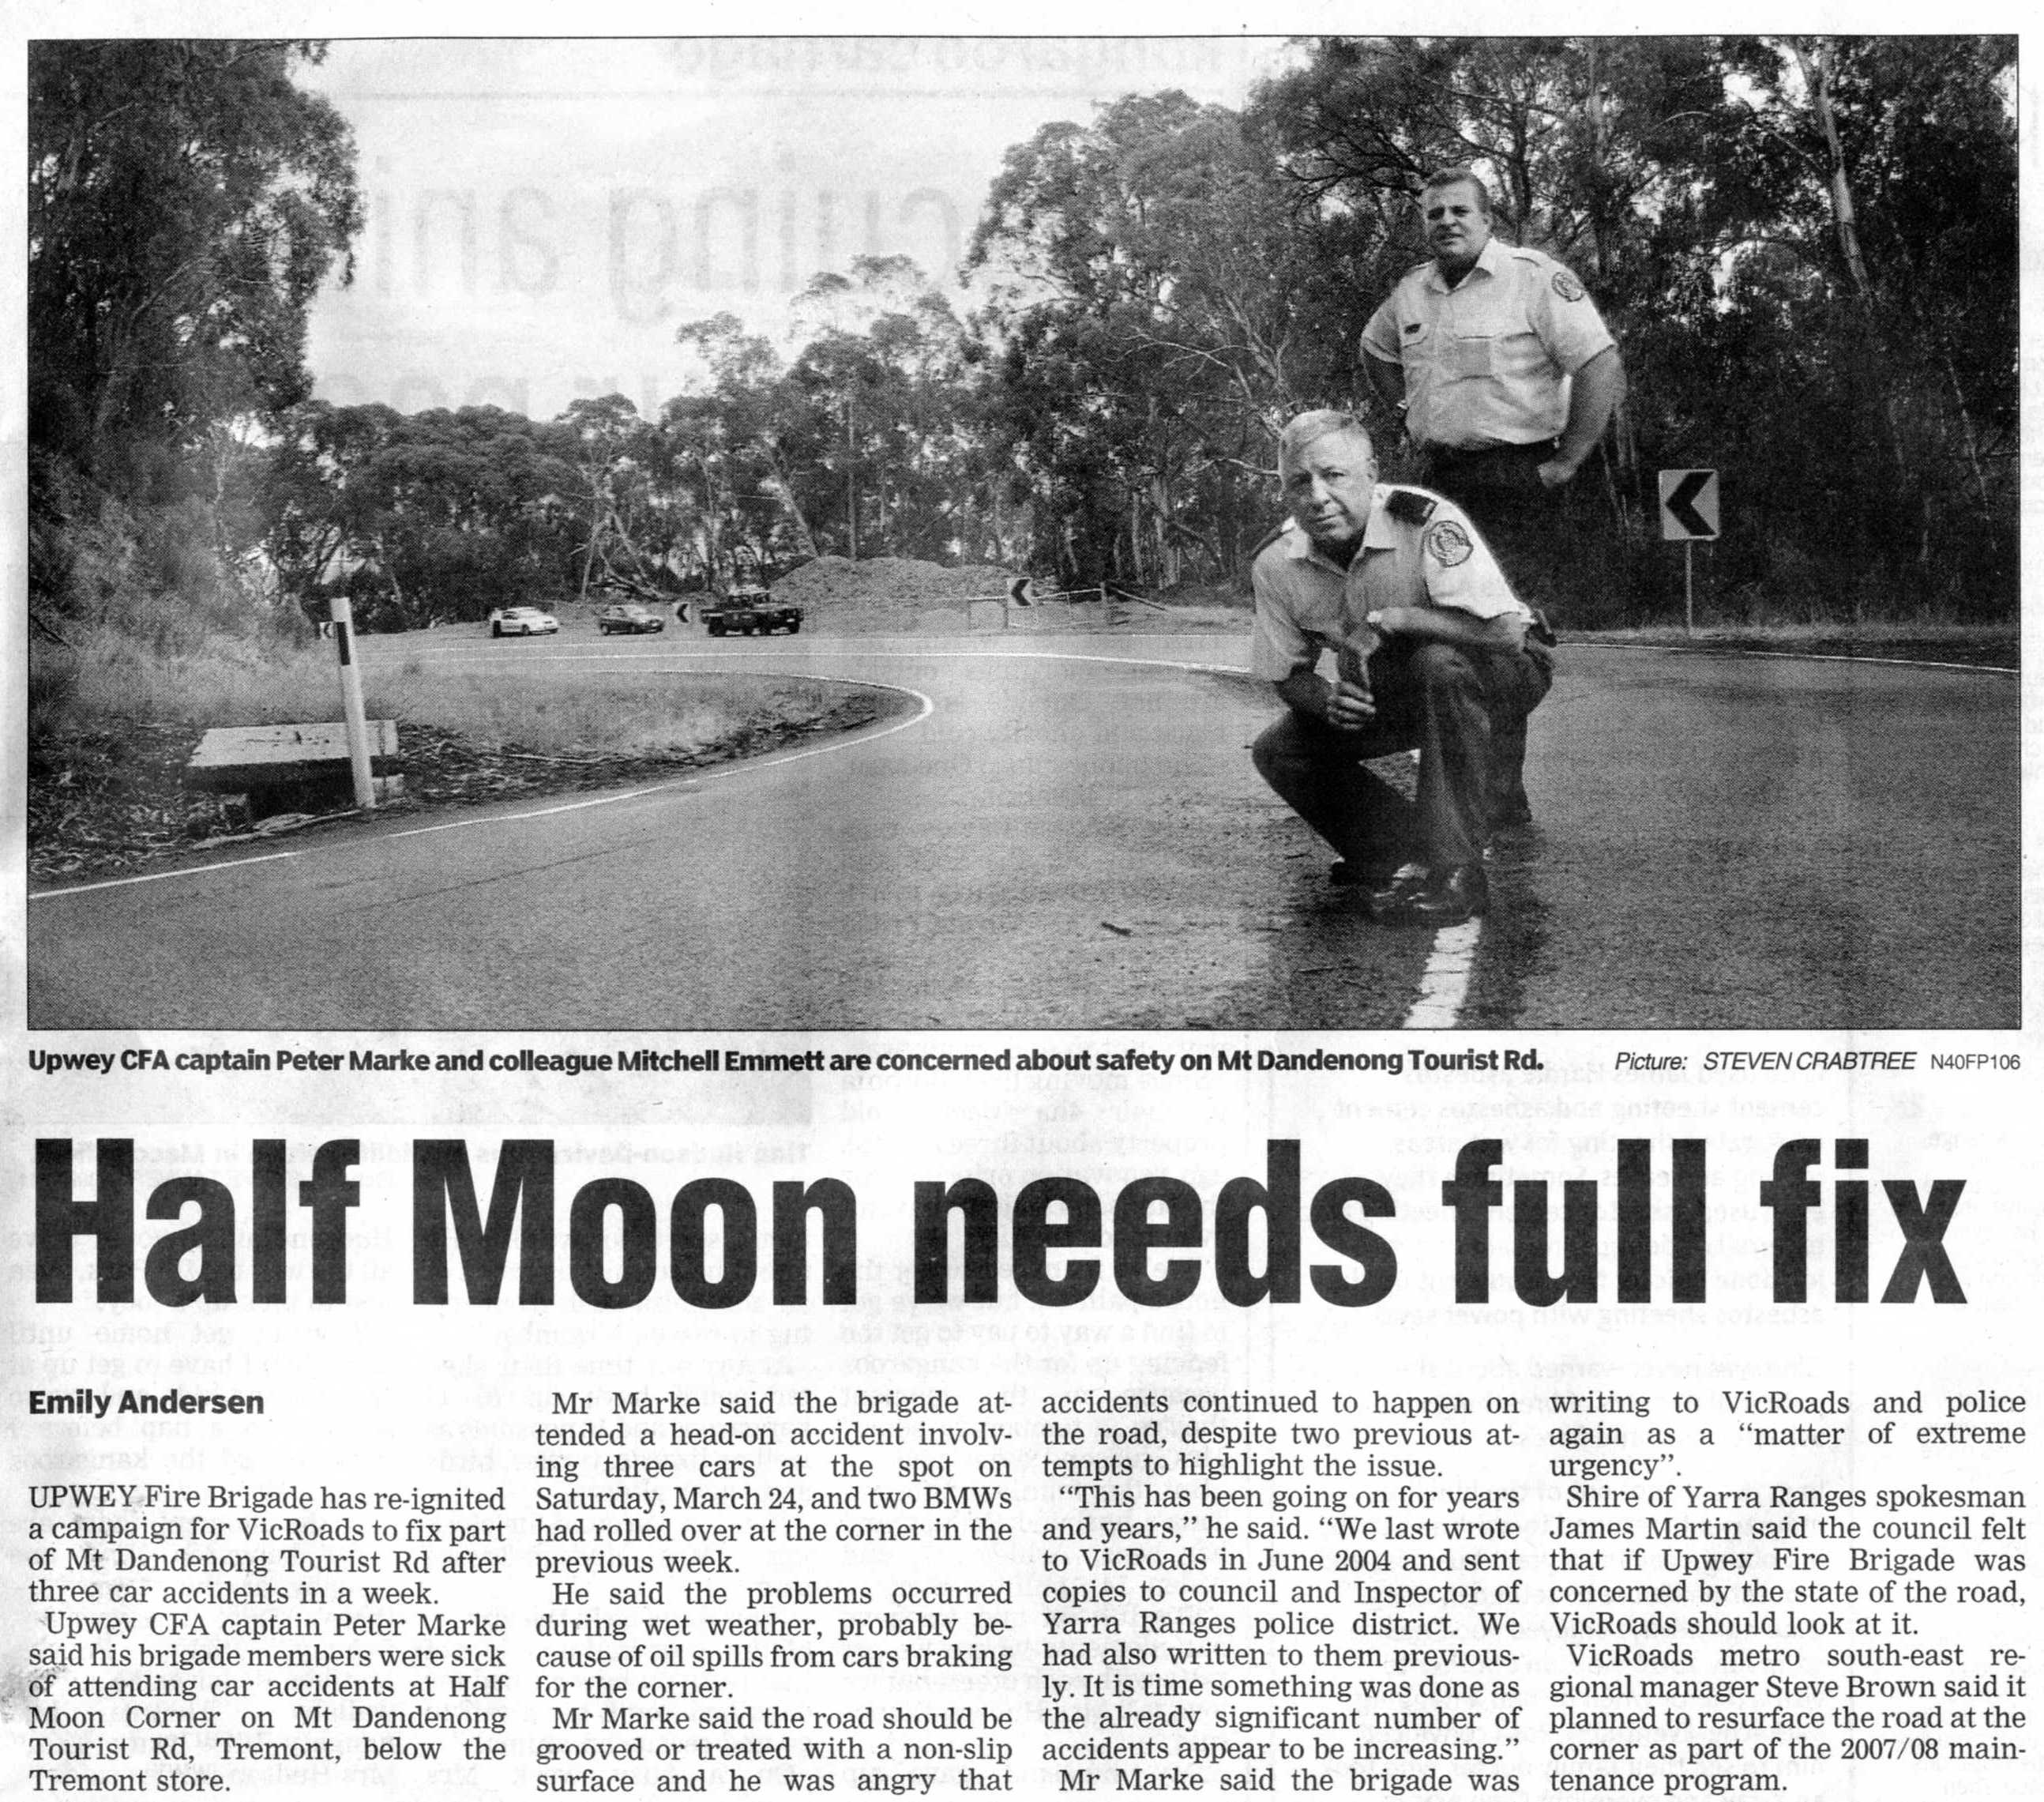 Half Moon needs full fix